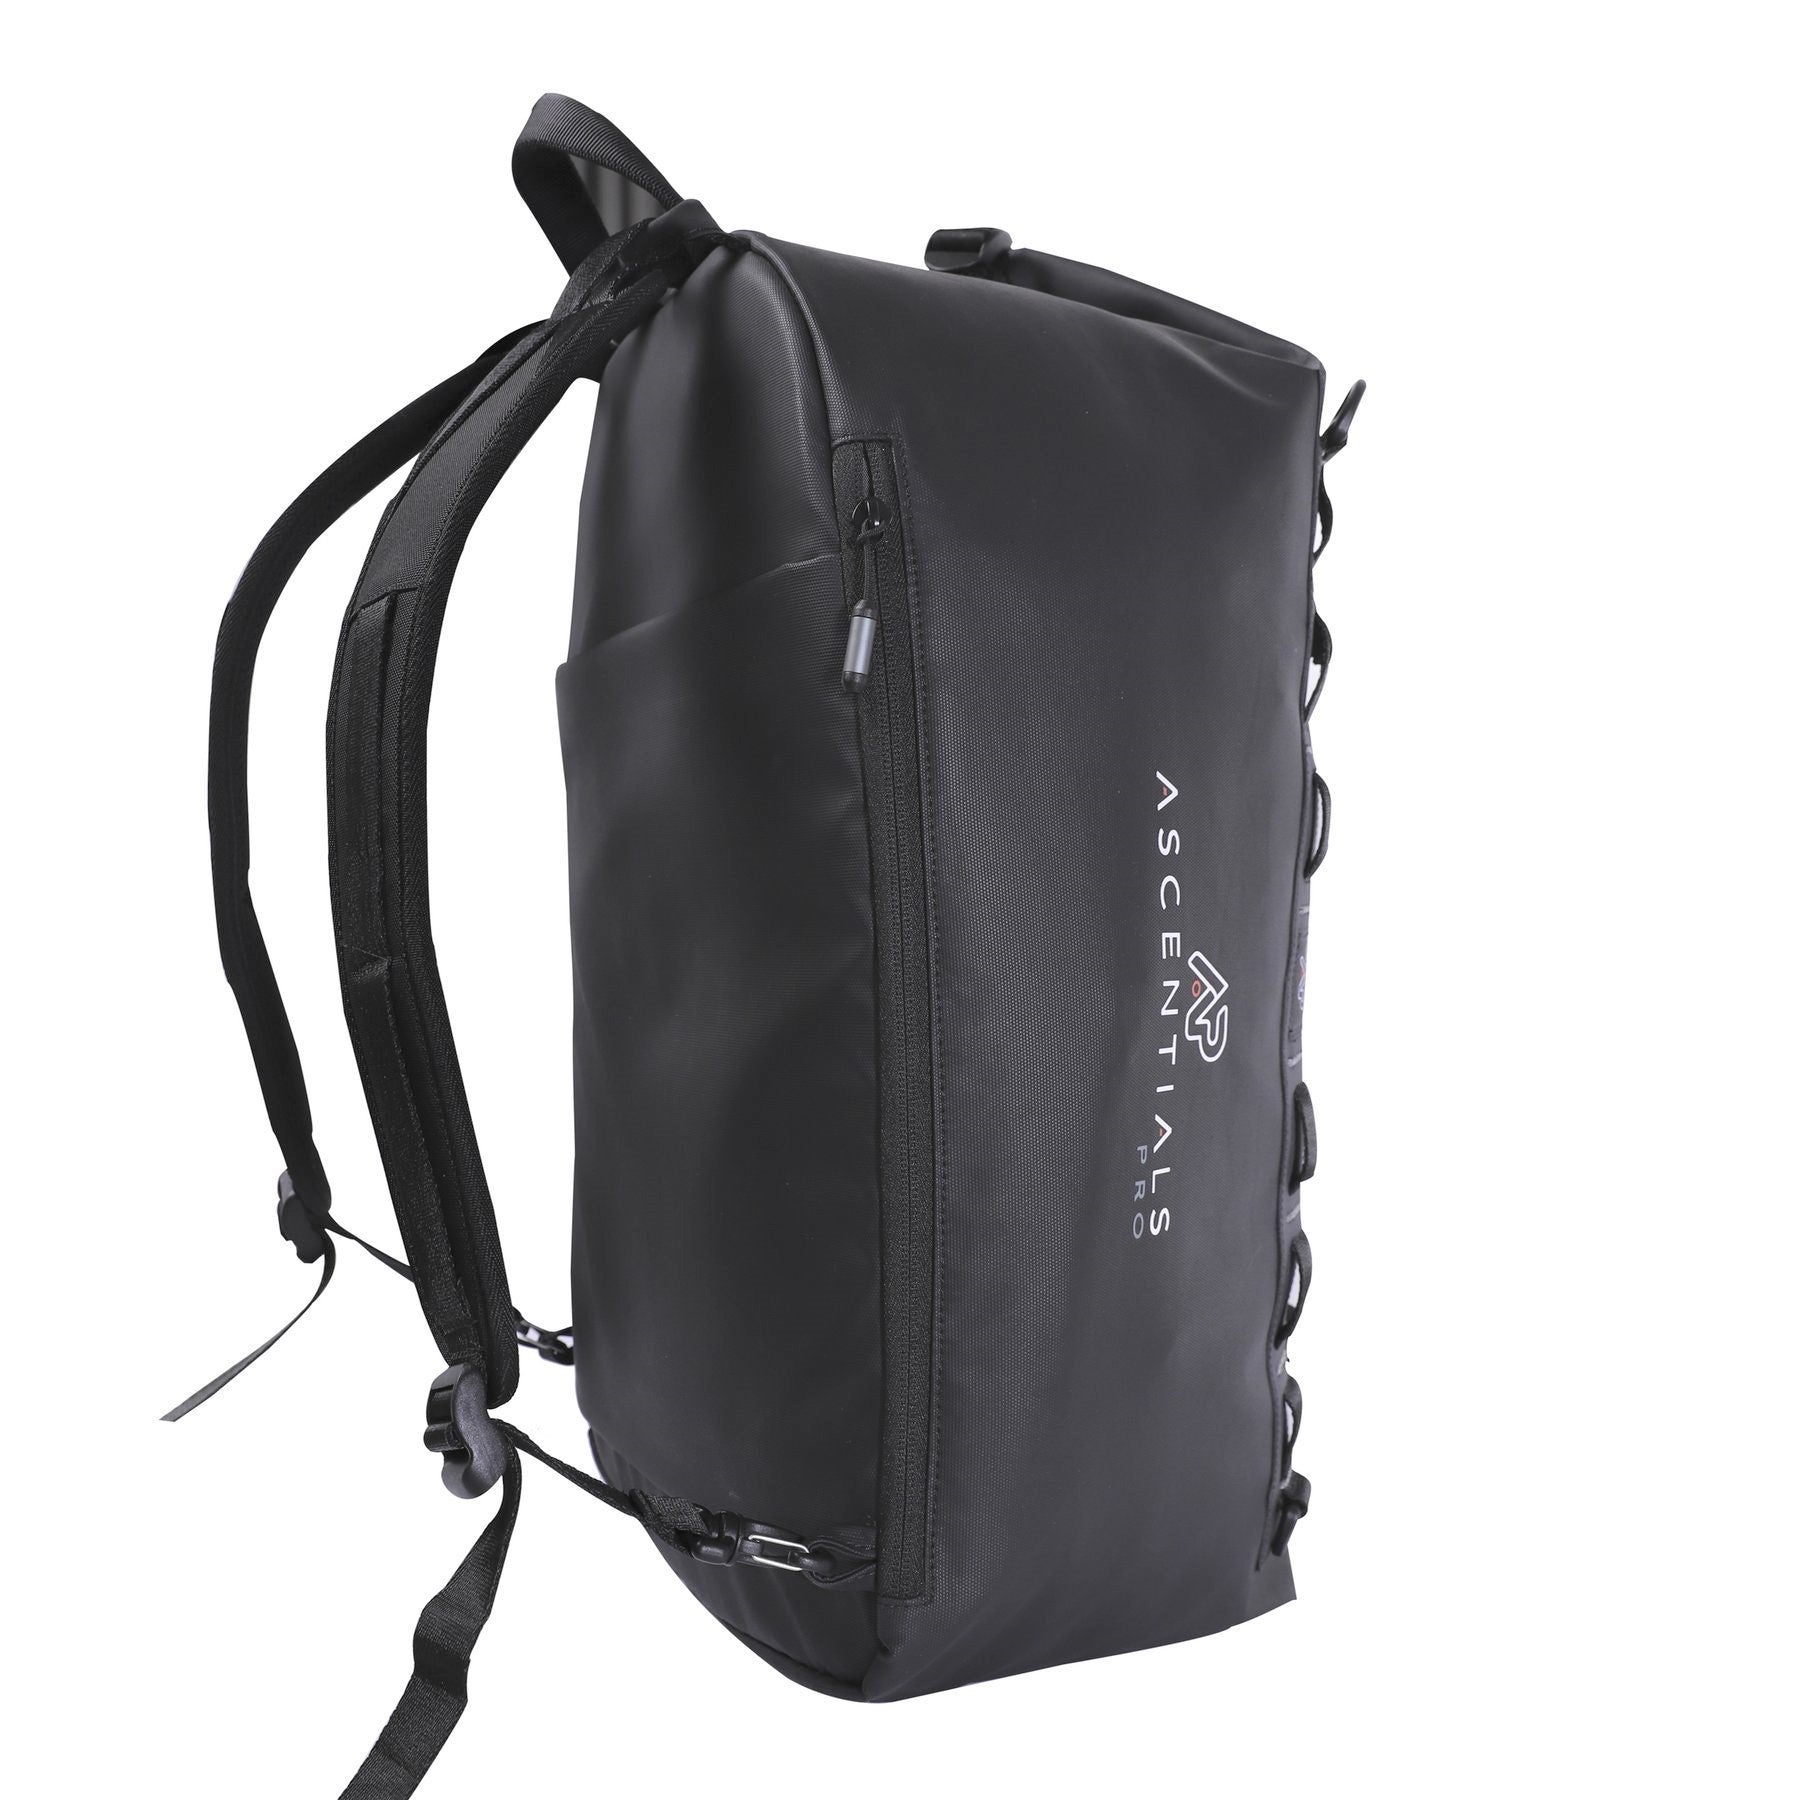 Ascentials Pro Vipor Convertible Laptop Travel Duffel Bag Backpack Black